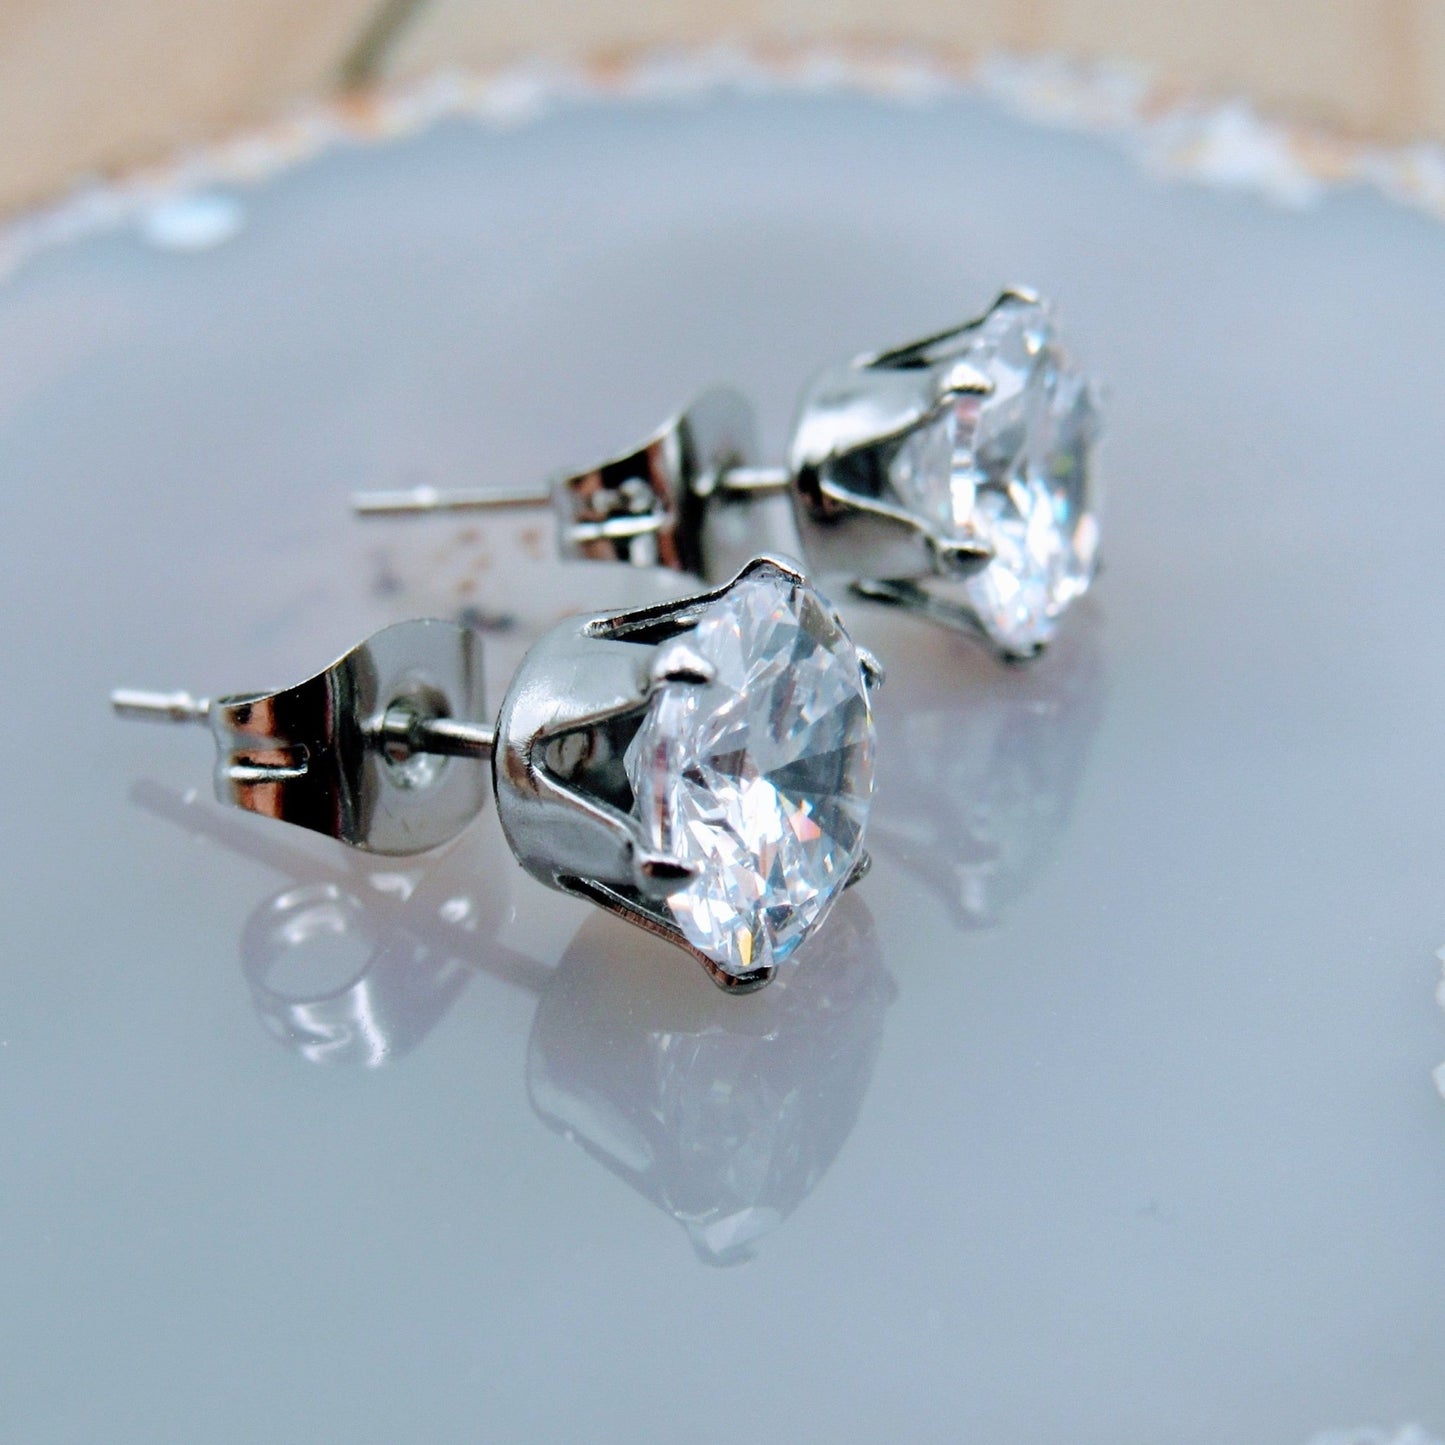 CZ prong set gemstone earrings 20g 3mm-7mm round diameter gems butterfly back ear piercing studs pair - Siren Body Jewelry